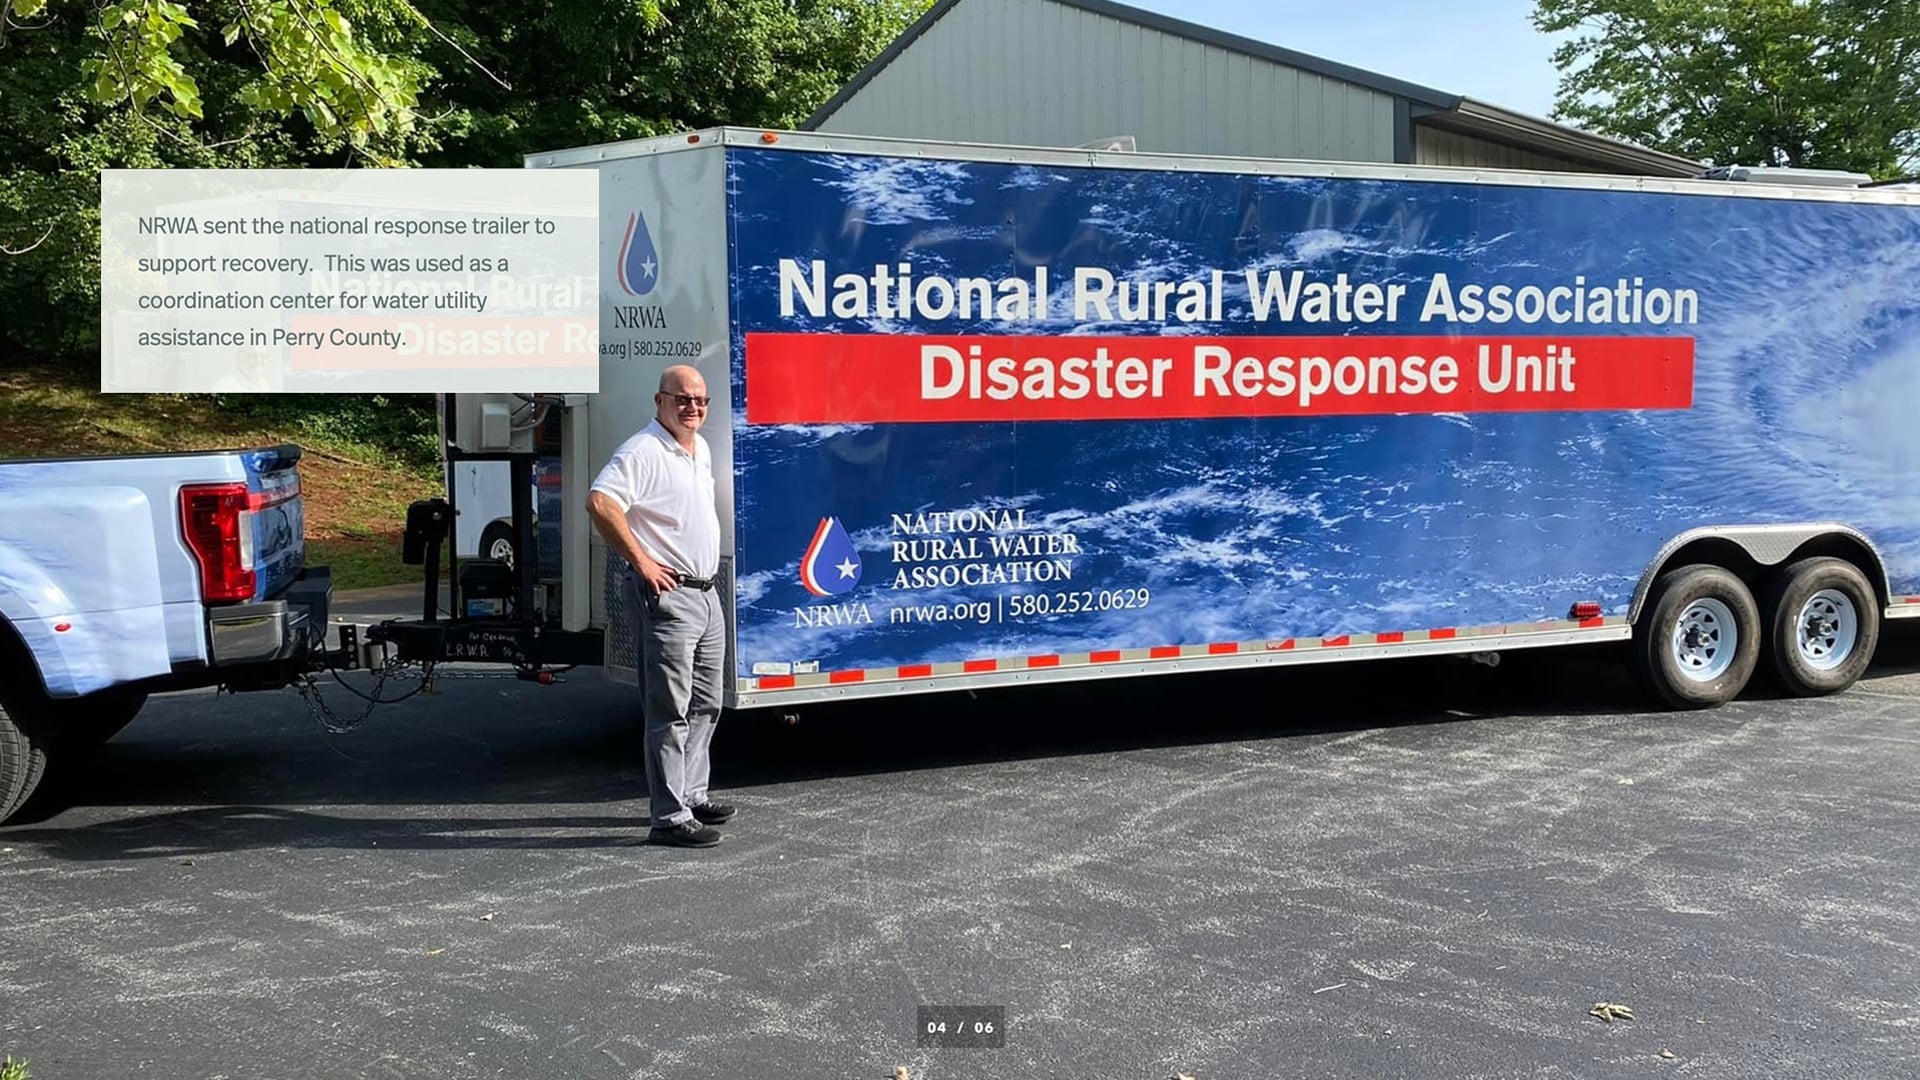 NRWA Eos Webinar: Disaster Response, National Rural Water Association